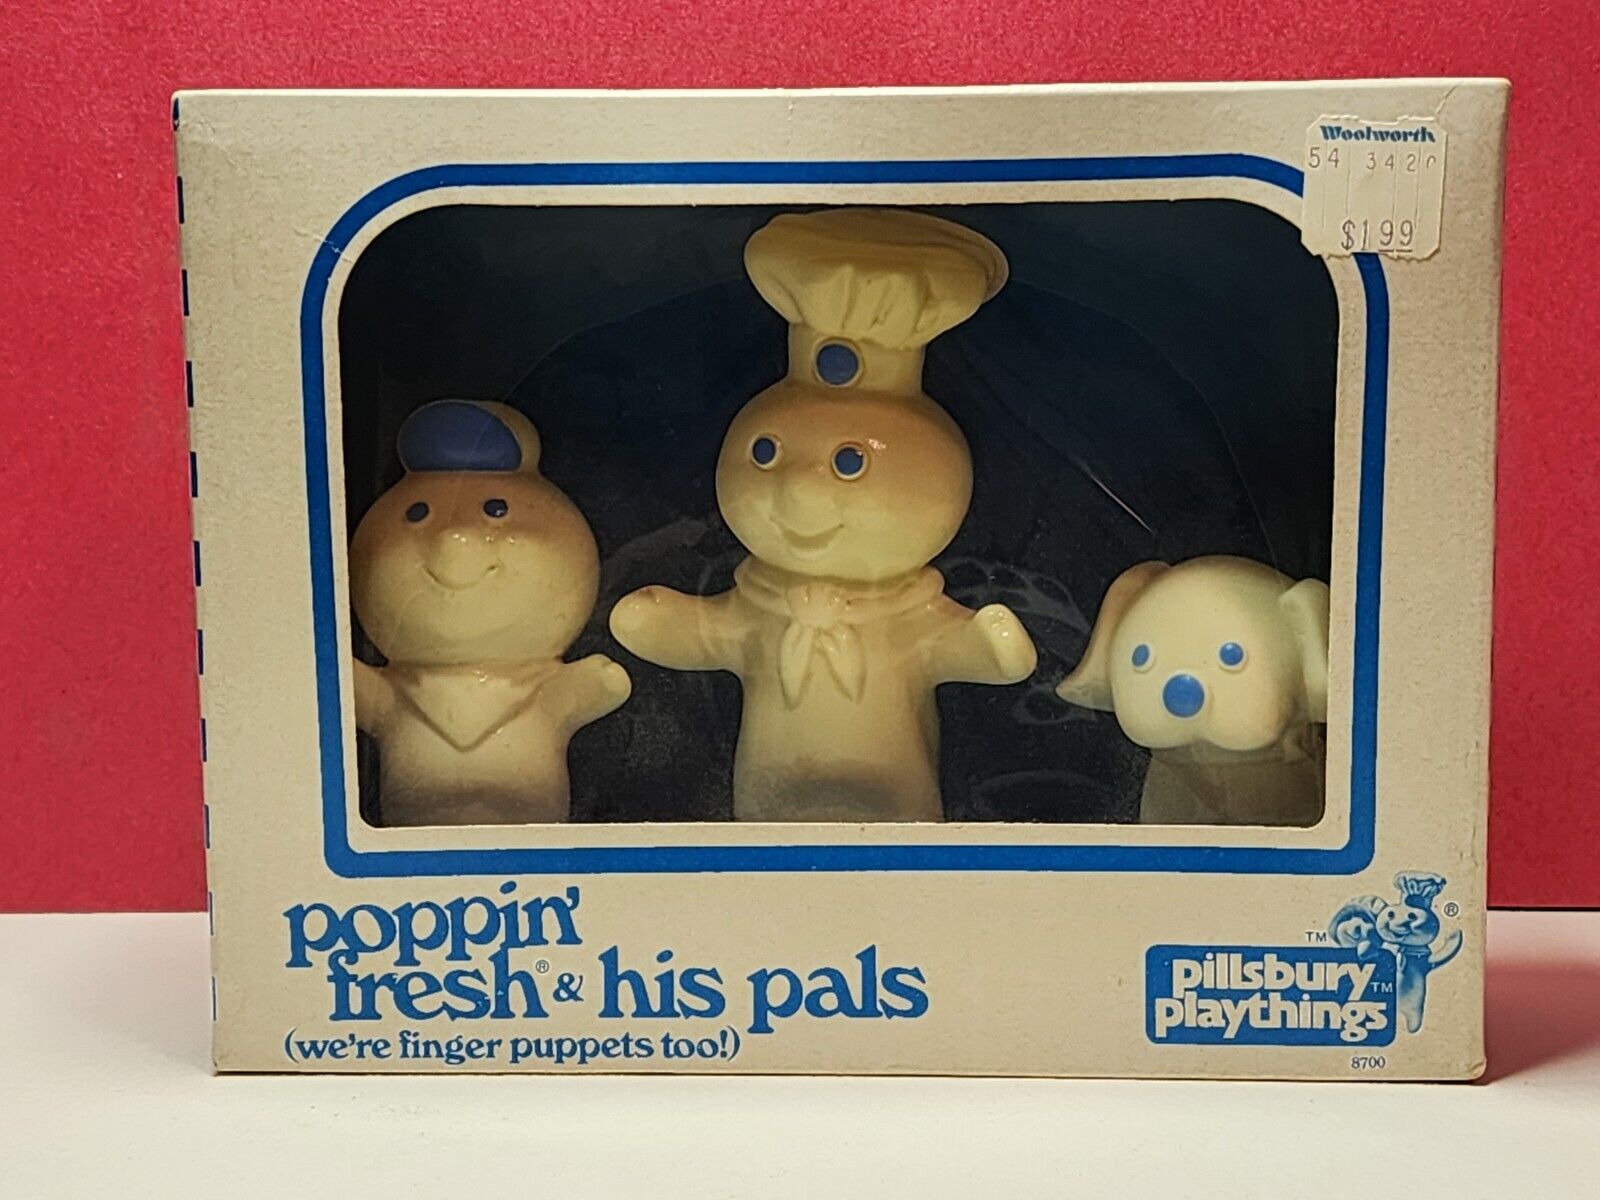 Pillsbury Playthings Poppin’ Fresh Dough Boy Popper Finger Puppets New In Box